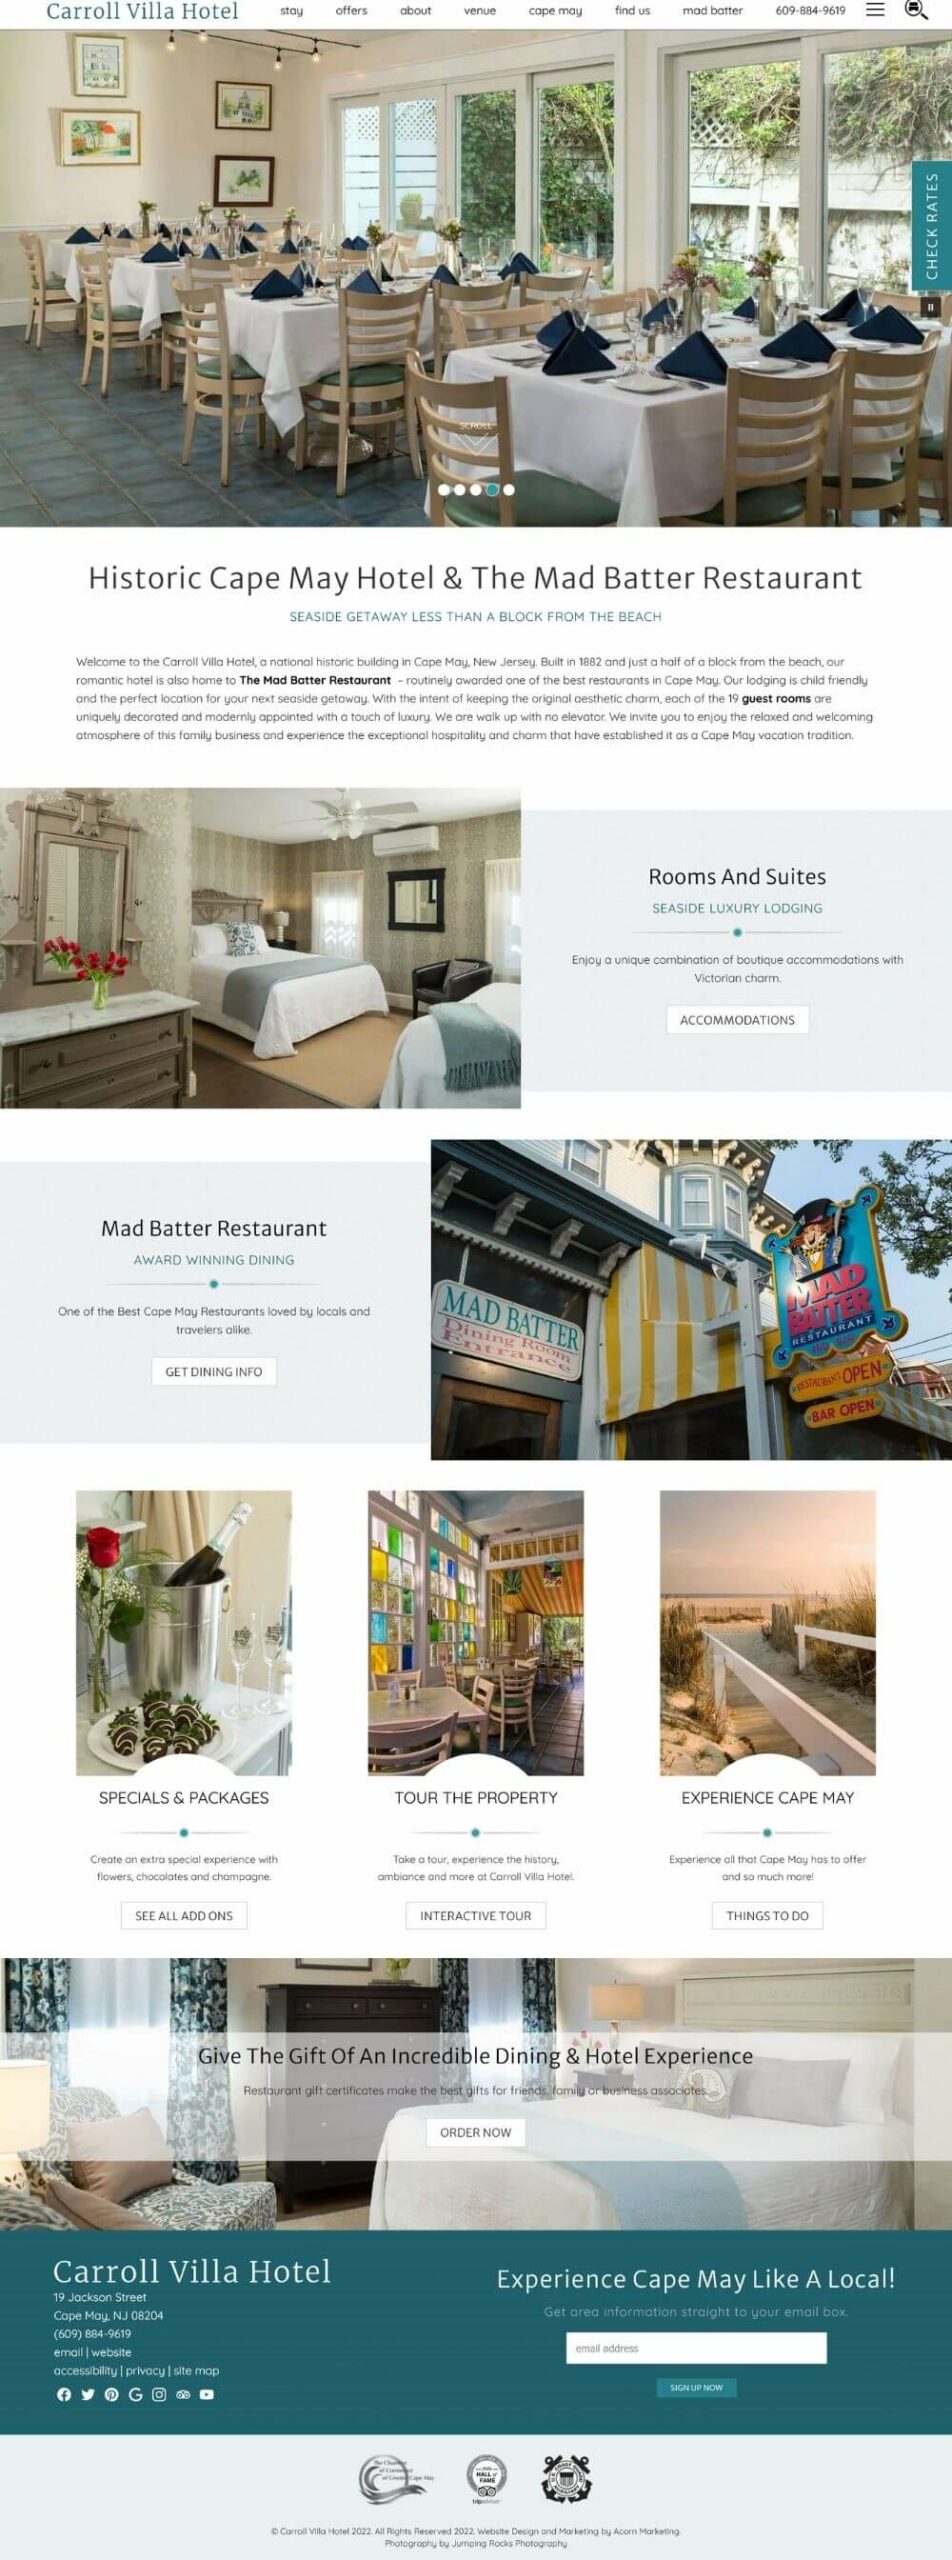 Carrol Villa Hotel website homepage screenshot